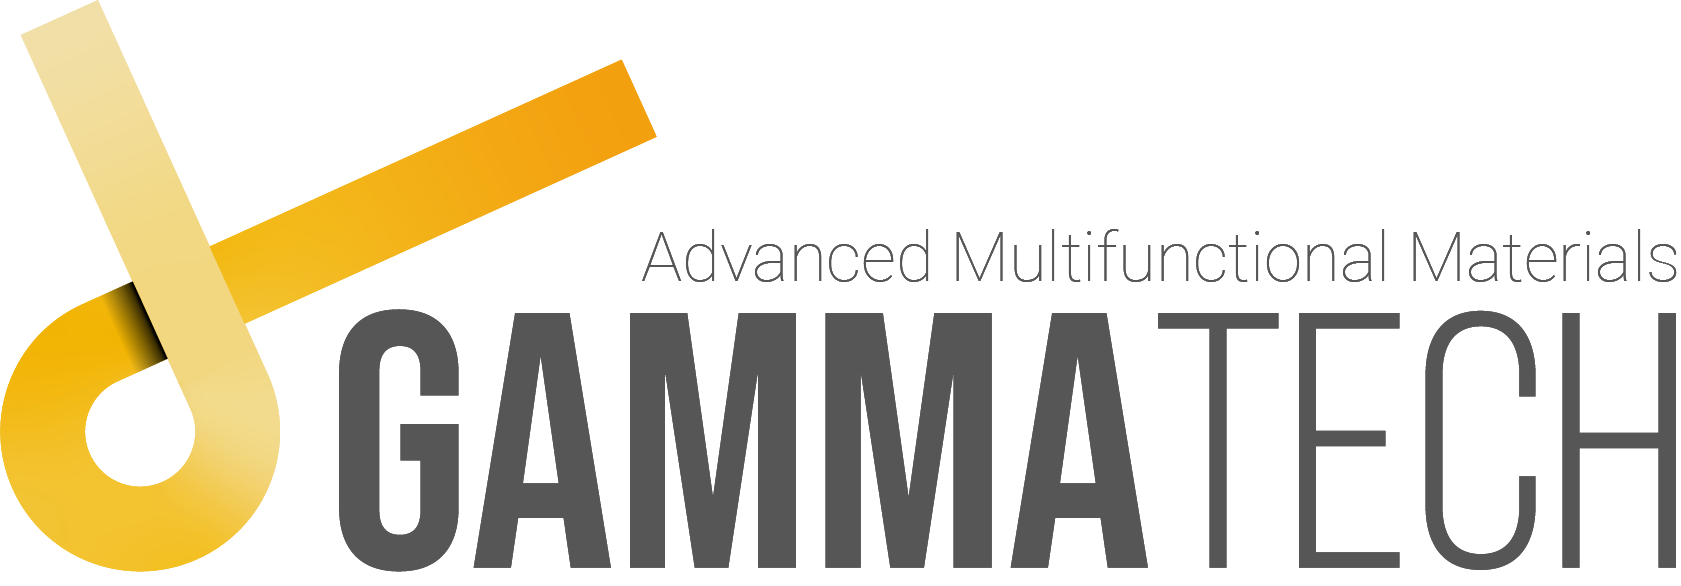 Gammatech logo 003